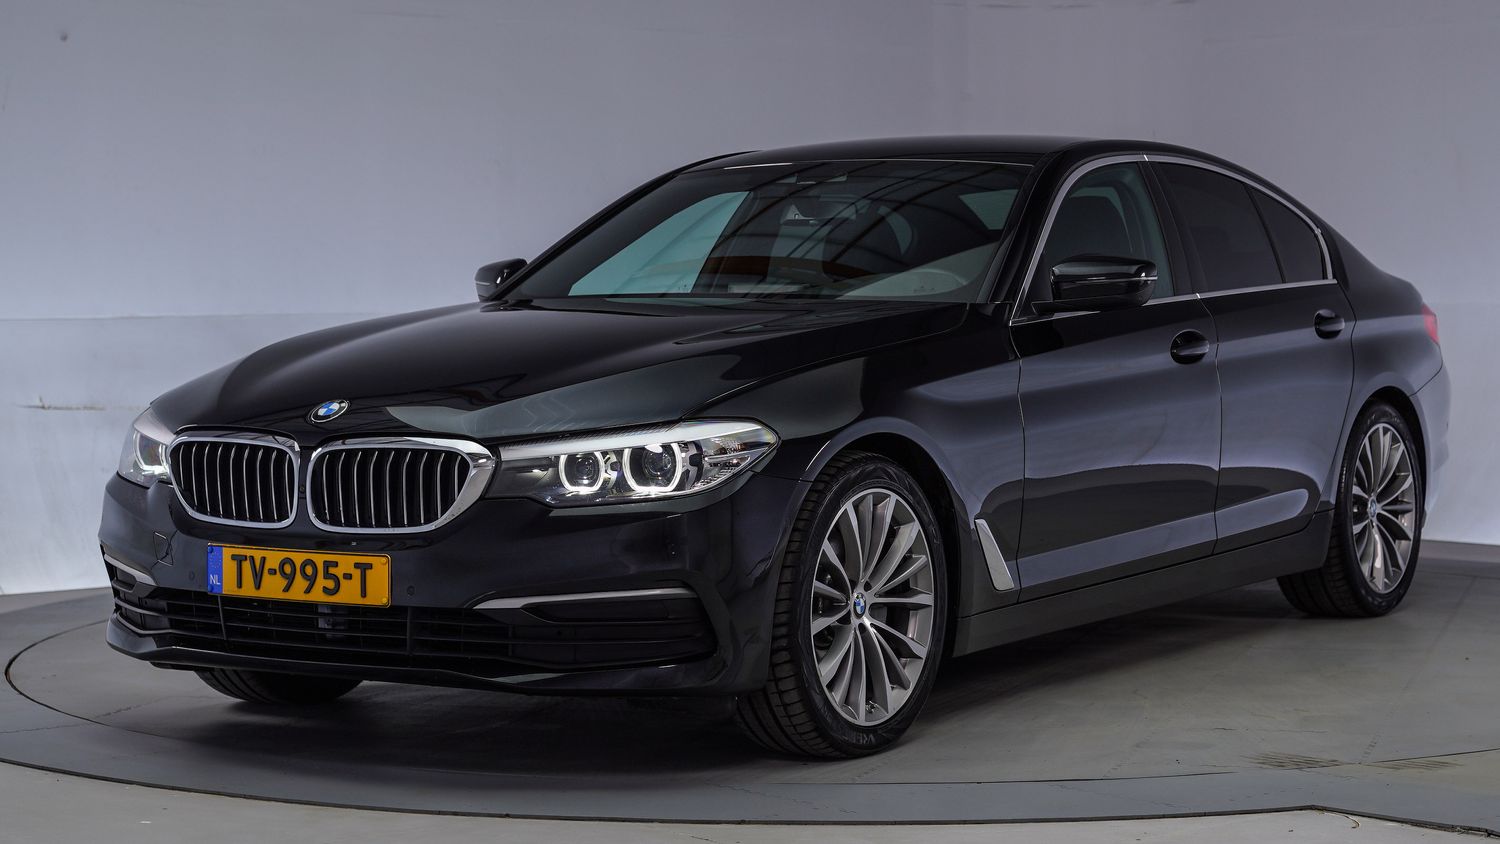 BMW 5-serie Sedan 2018 TV-995-T 1